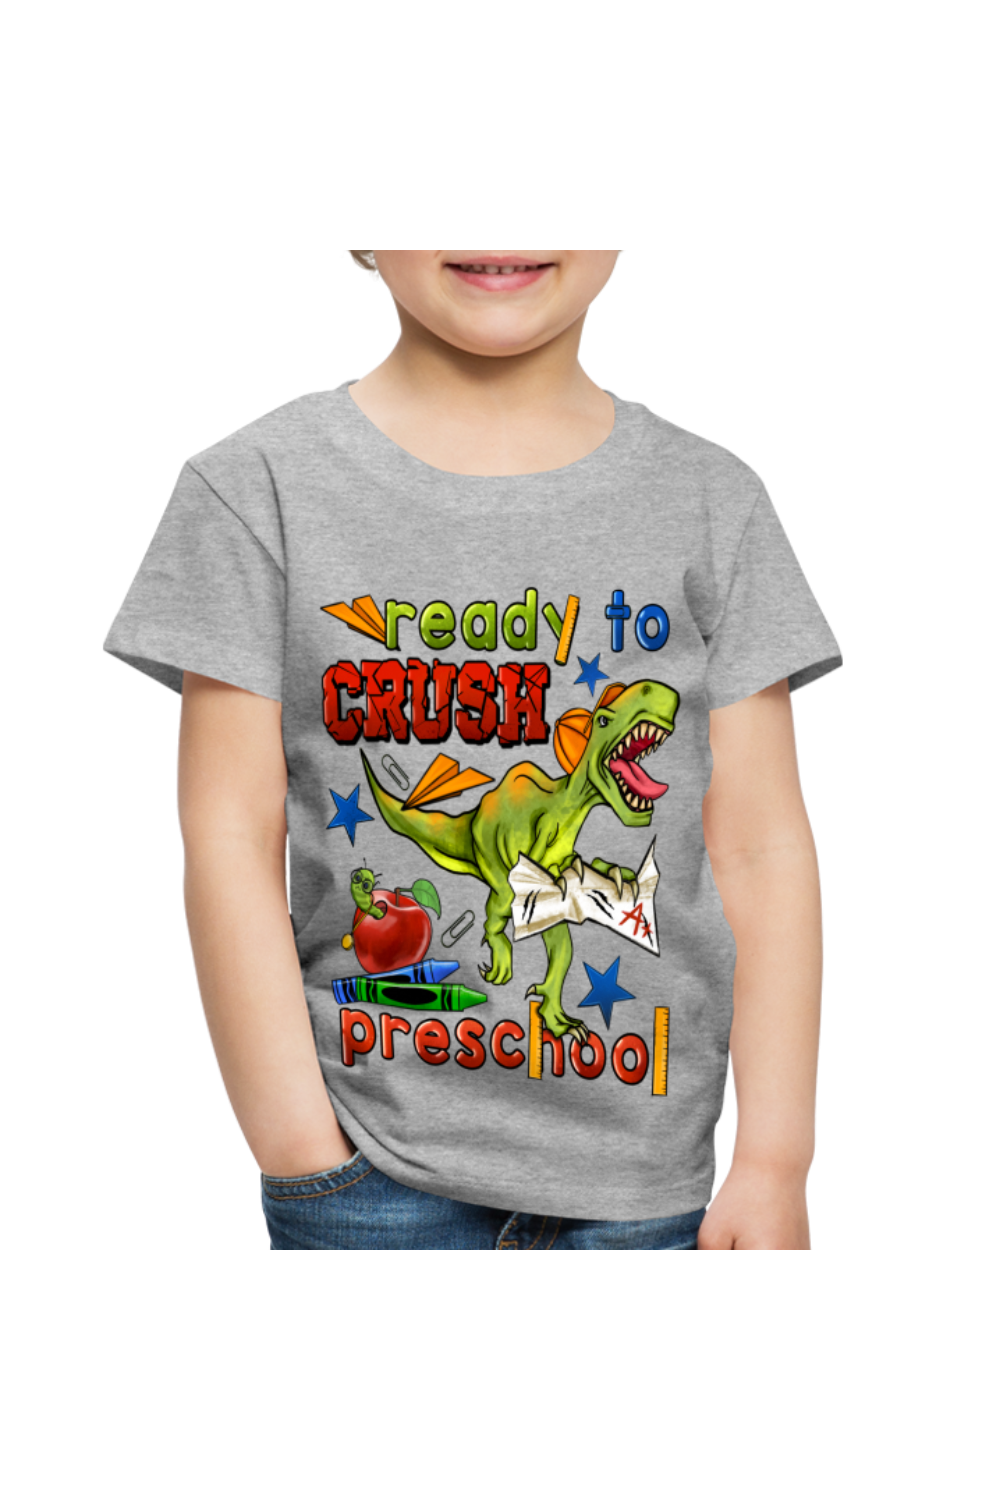 Toddler Boys Ready To Crush Preschool Short Sleeve Tee Shirt for Back To School - heather gray - NicholesGifts.online